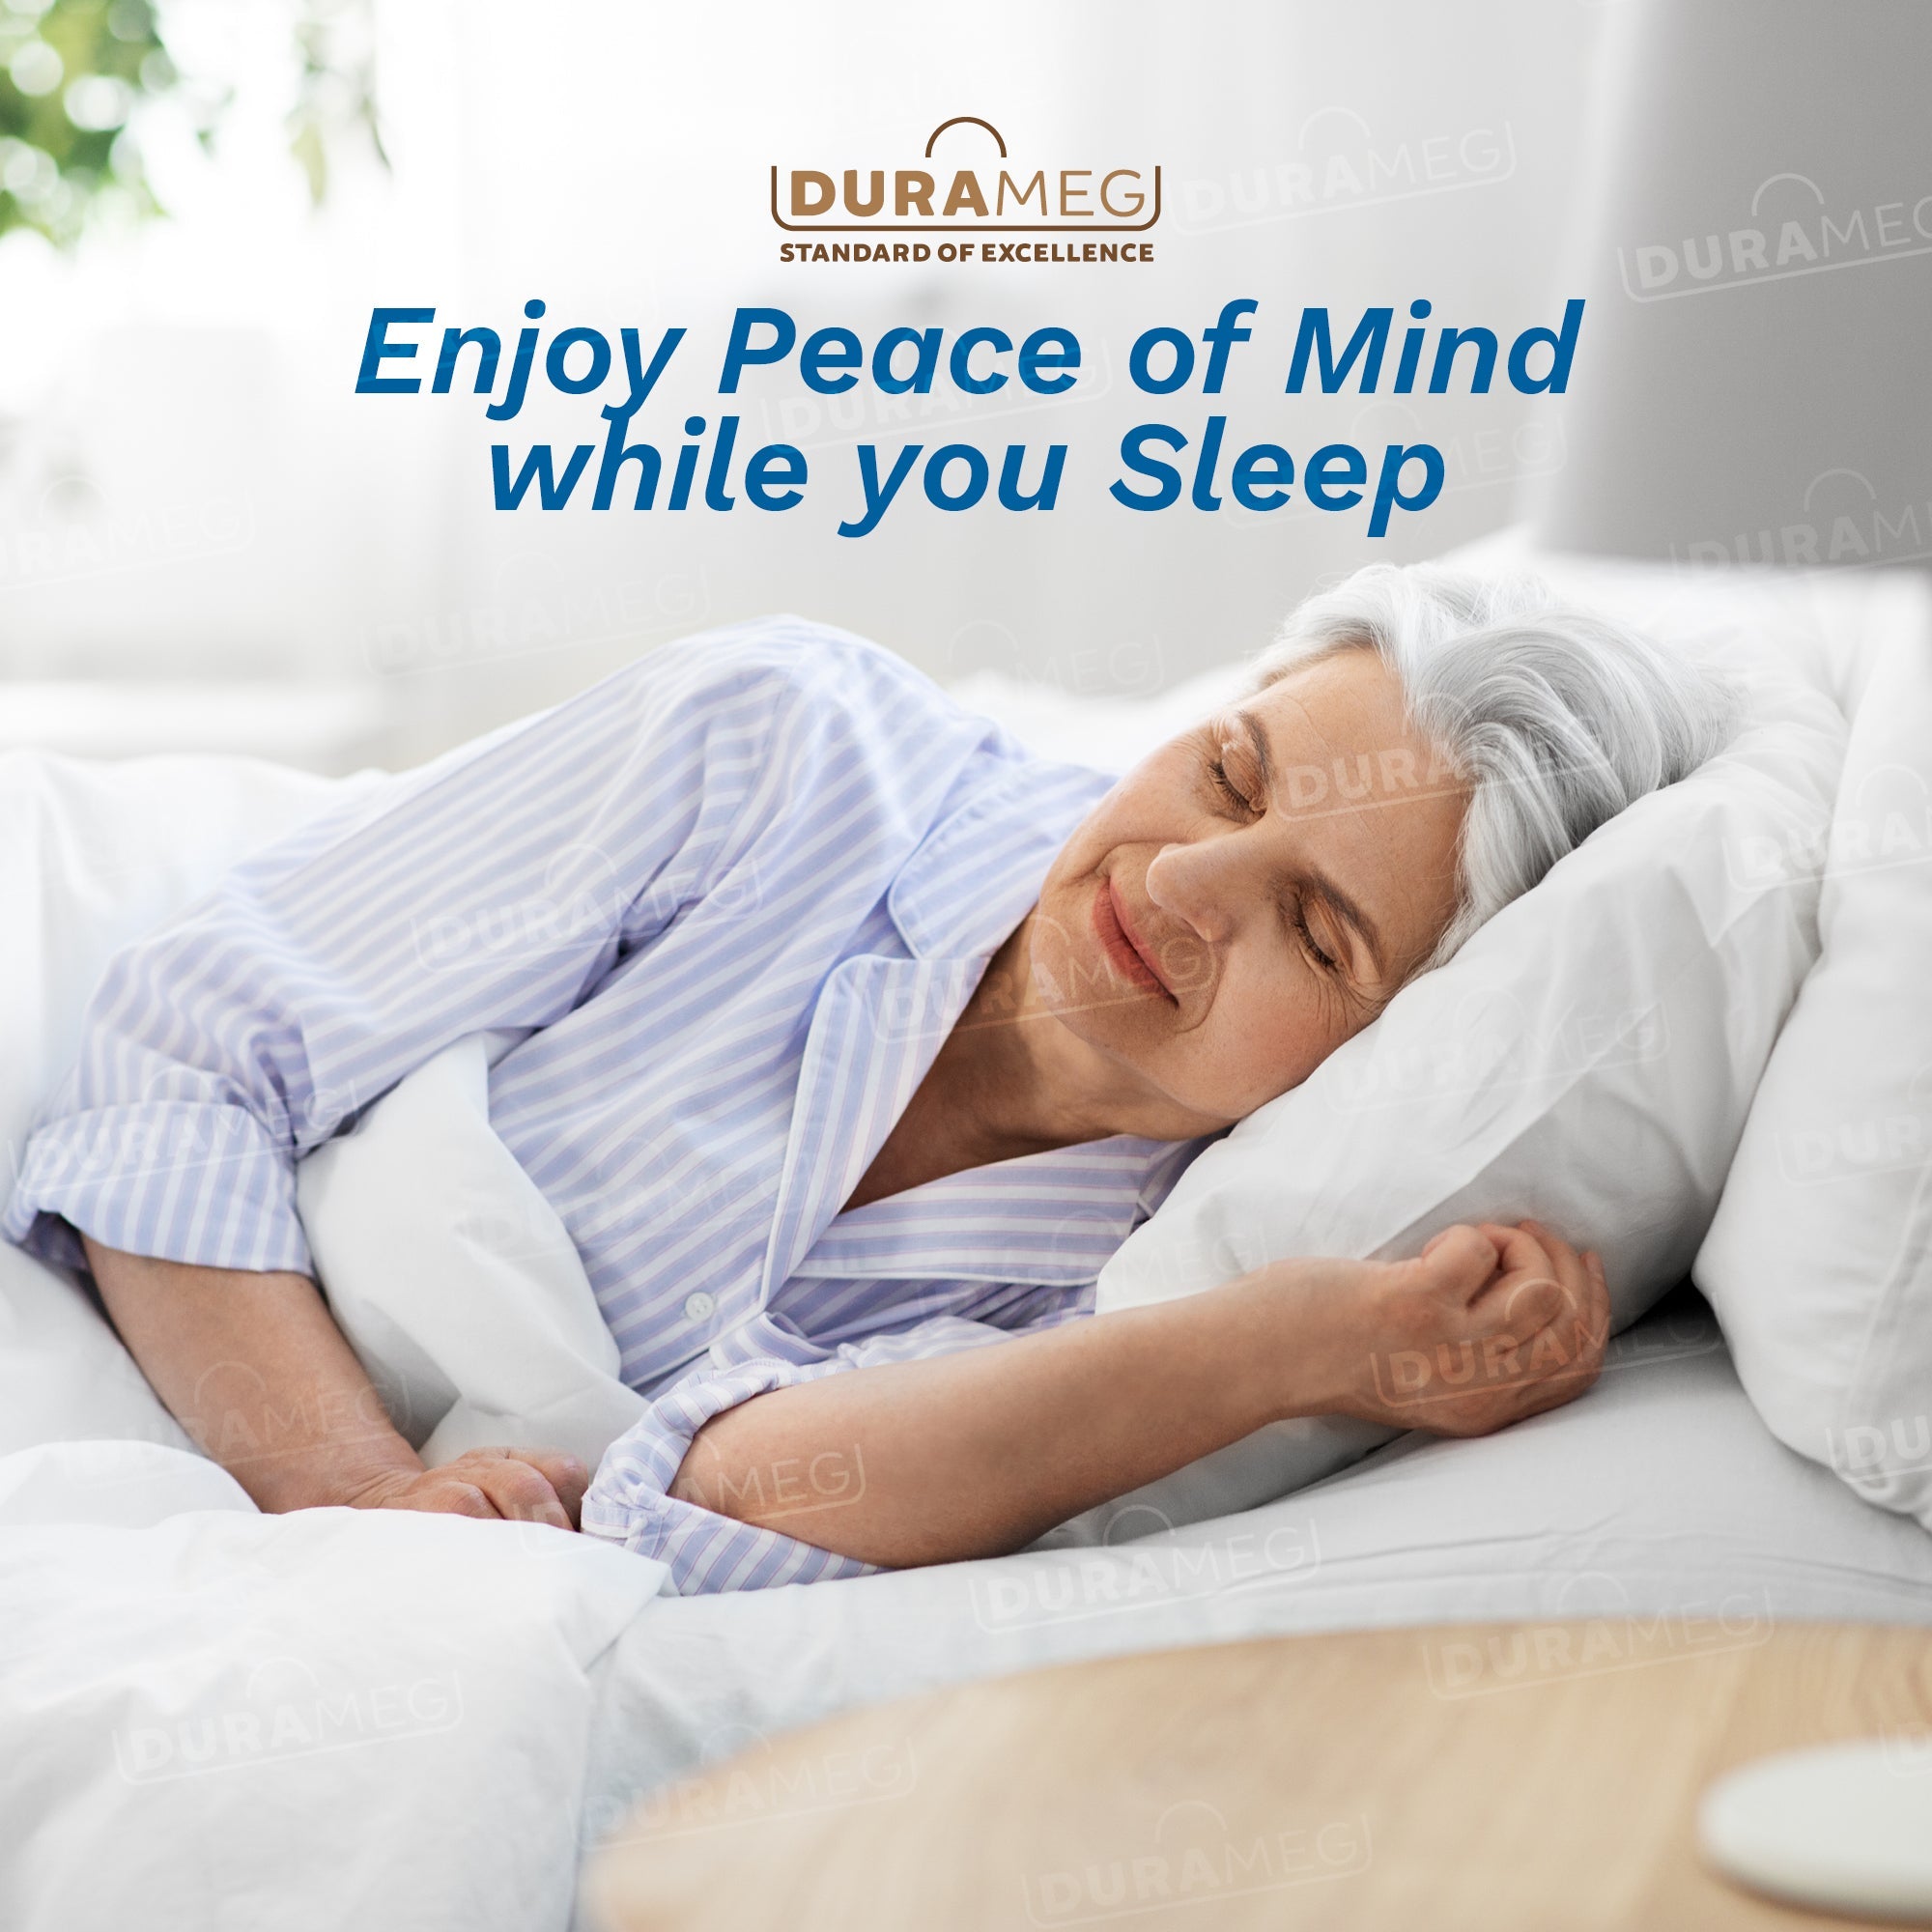 Enjoy peace of mind while you sleep